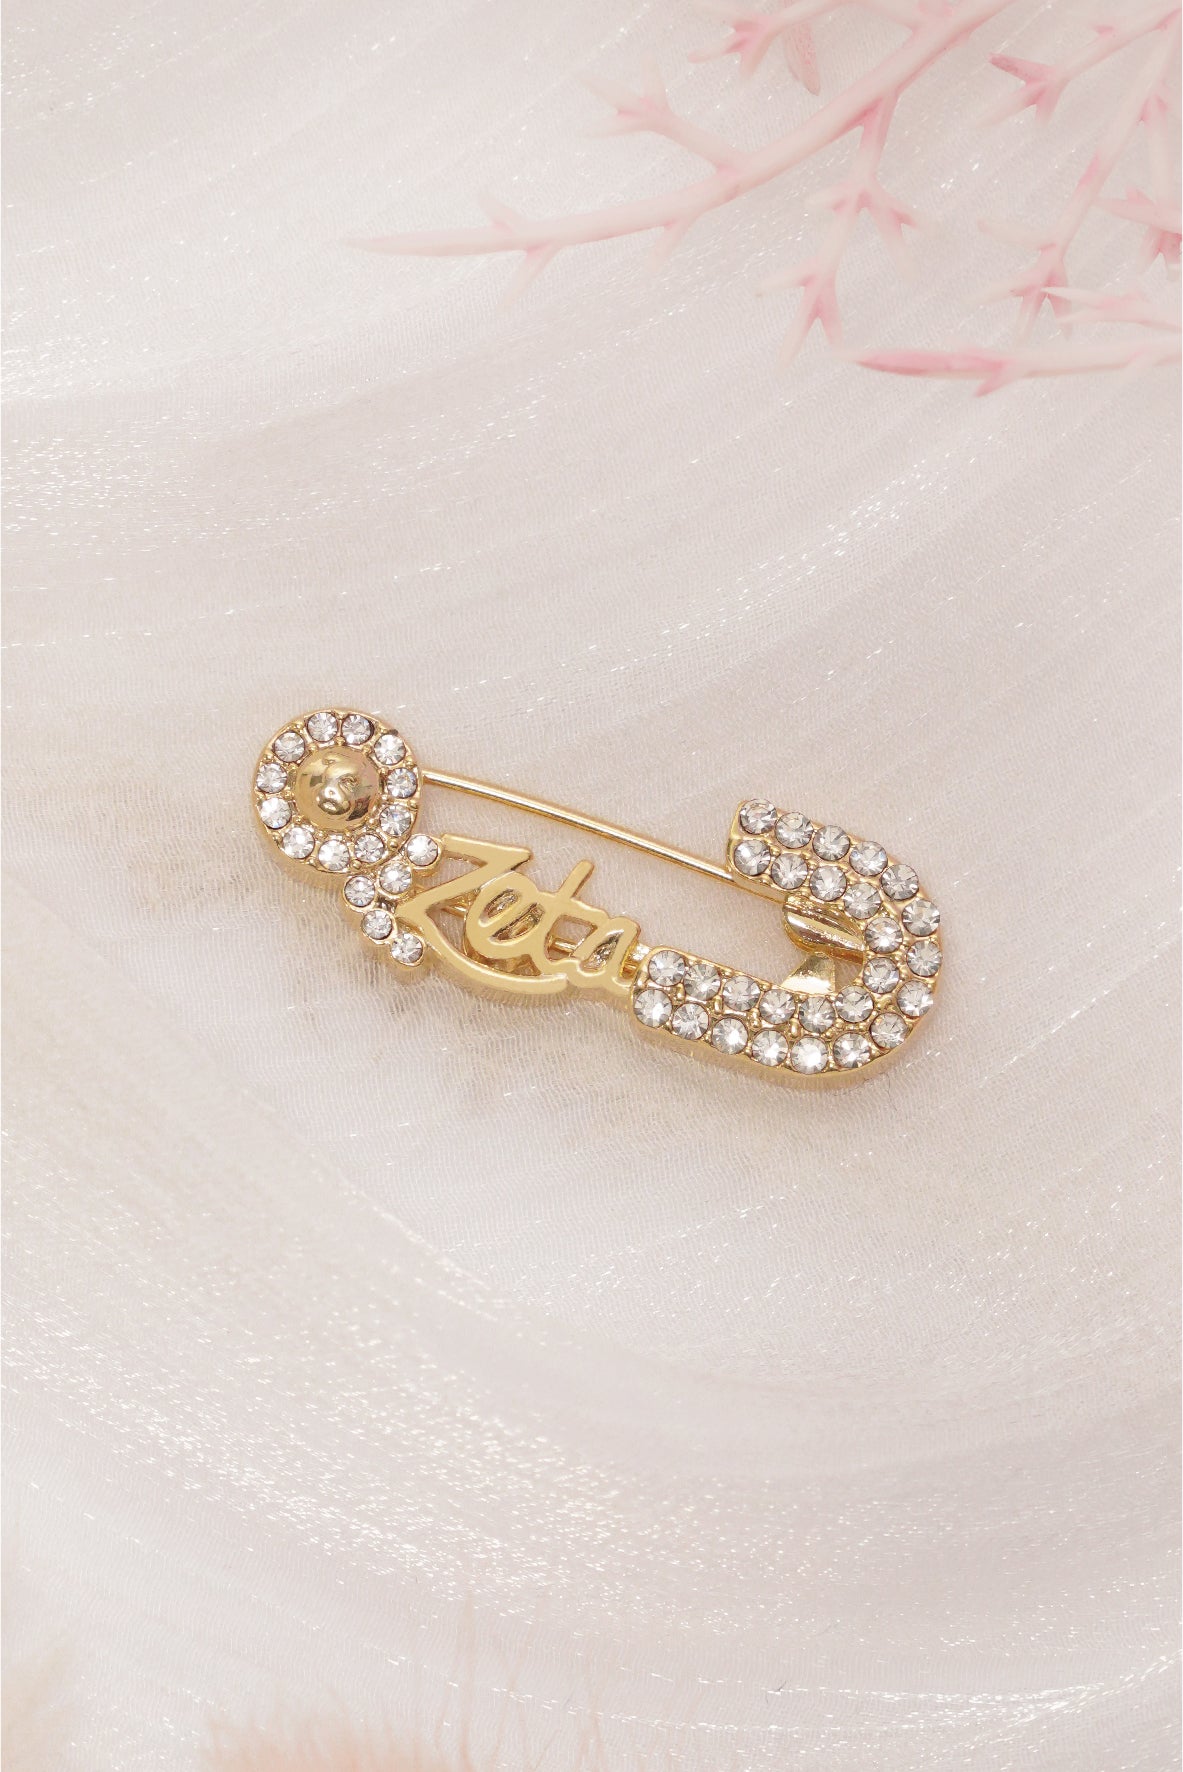 Safety Hijab Pin Set - Gold